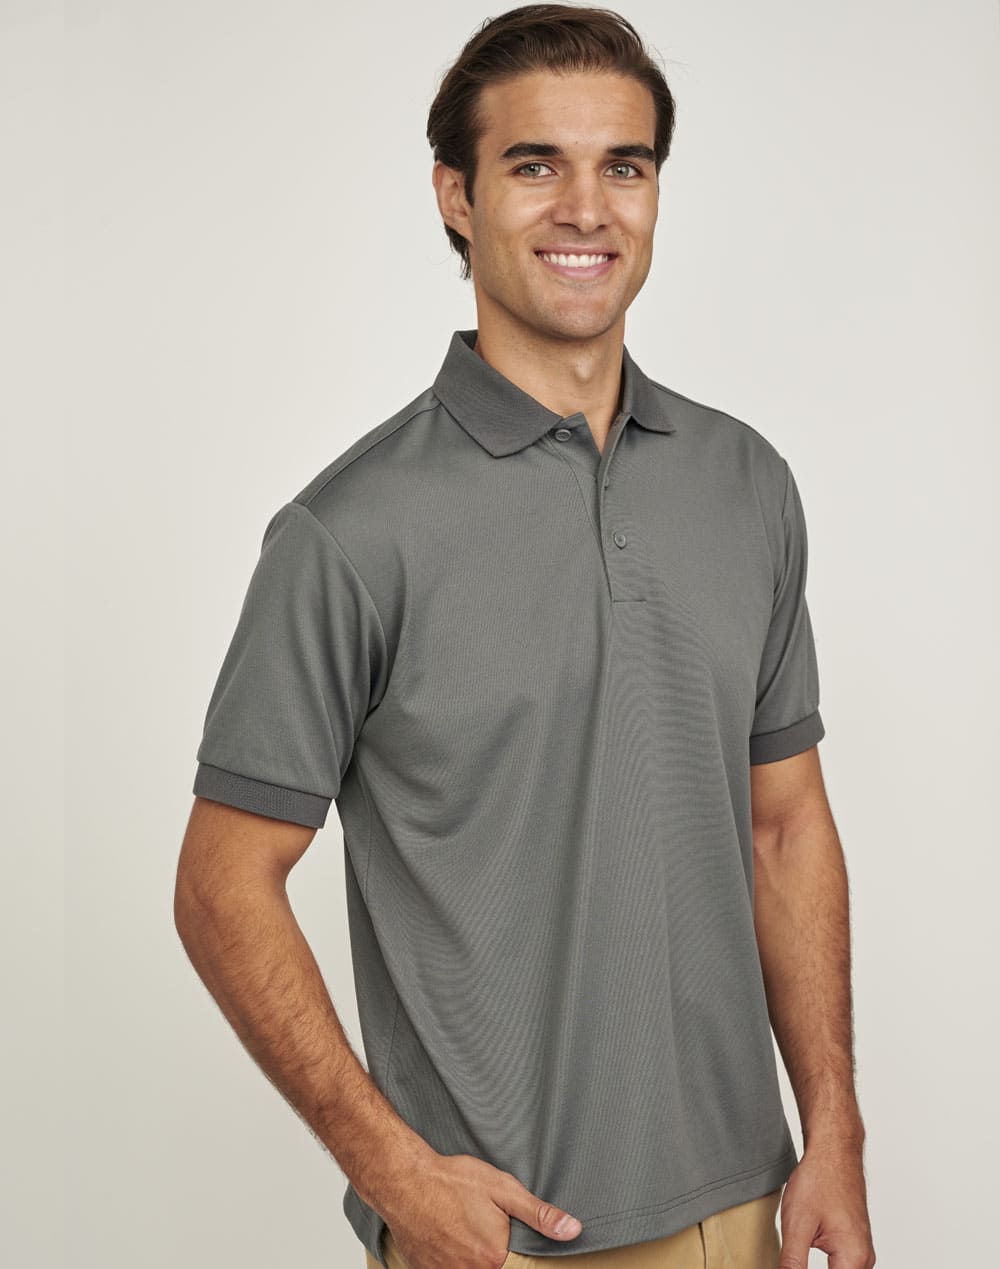 Custom Made Men's Corporate Branded Polo Shirts Online Perth Australia